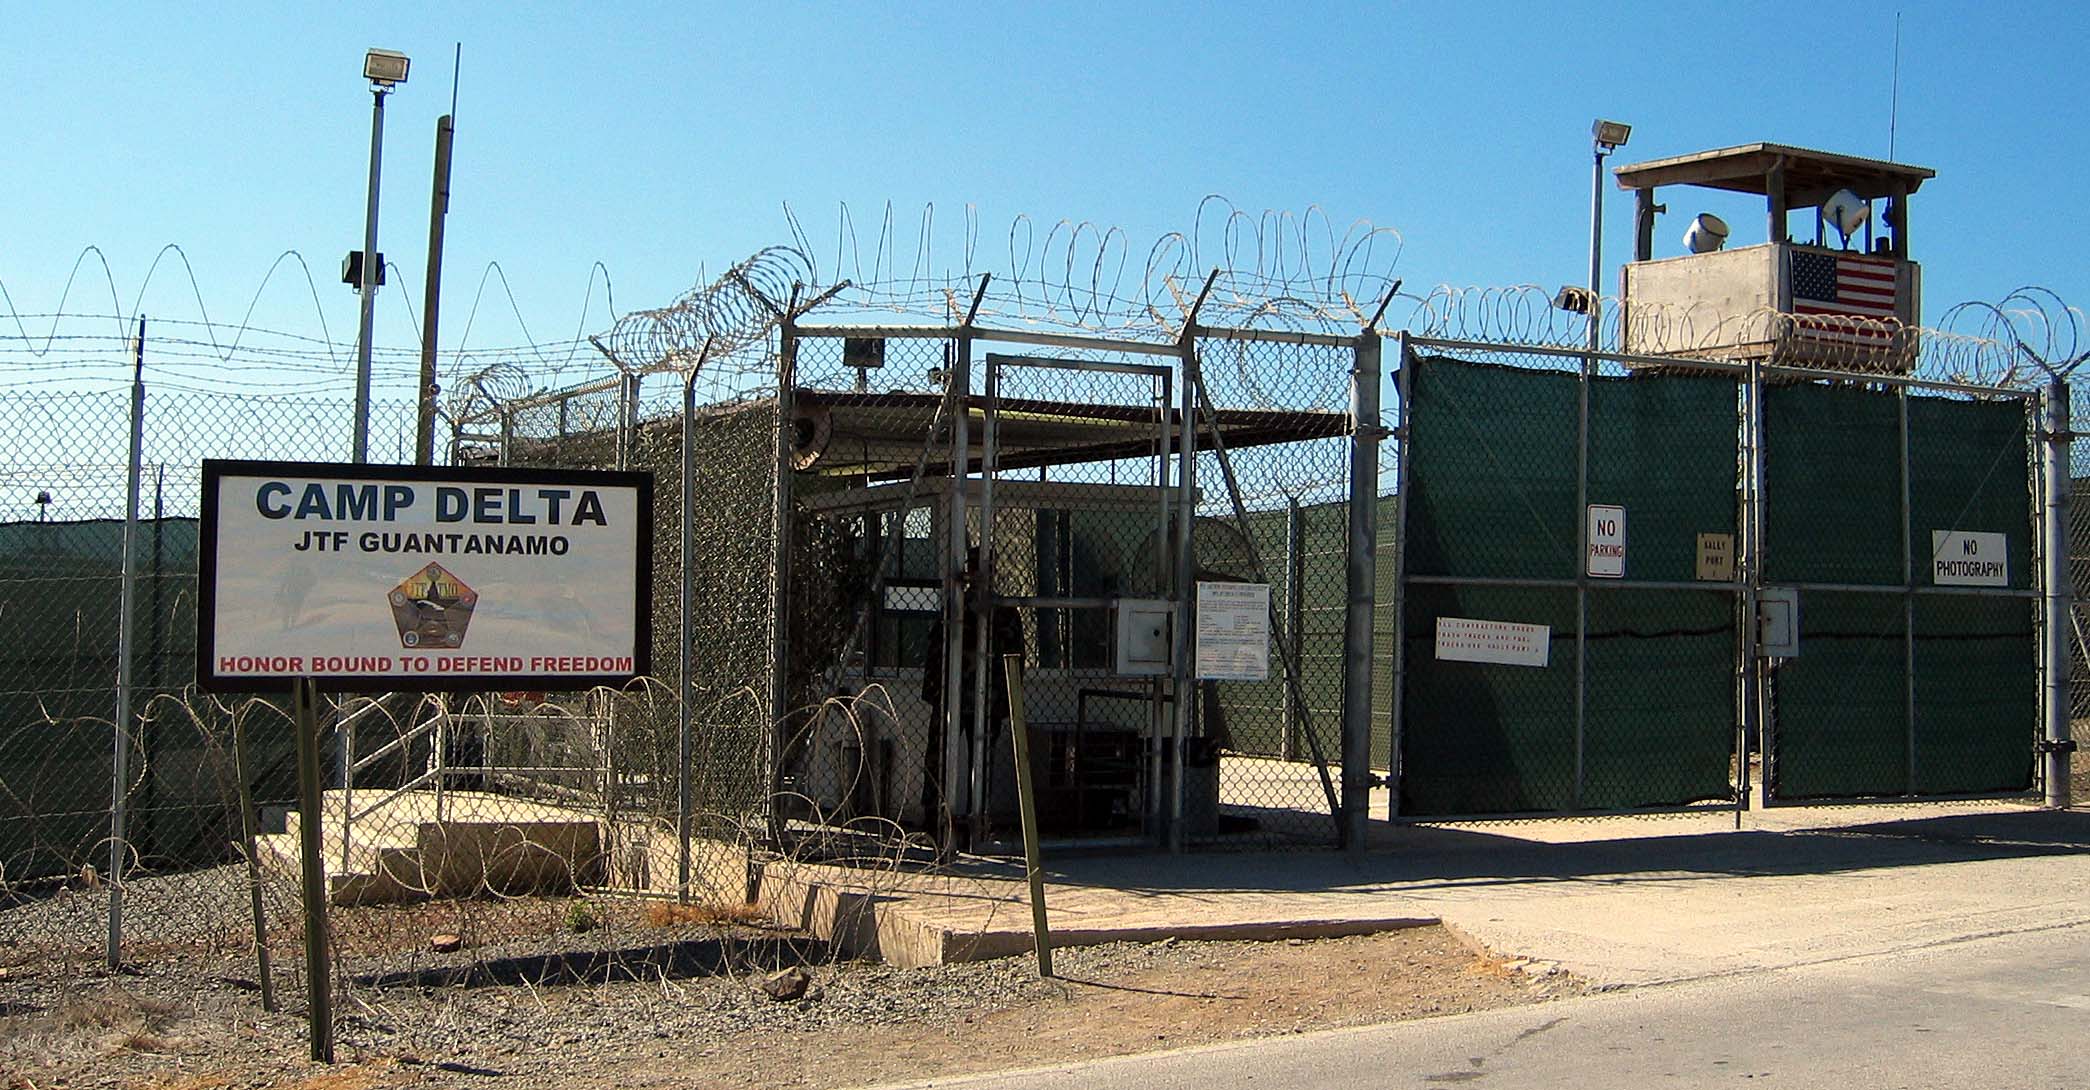 https://upload.wikimedia.org/wikipedia/commons/7/74/Camp_Delta,_Guantanamo_Bay,_Cuba.jpg